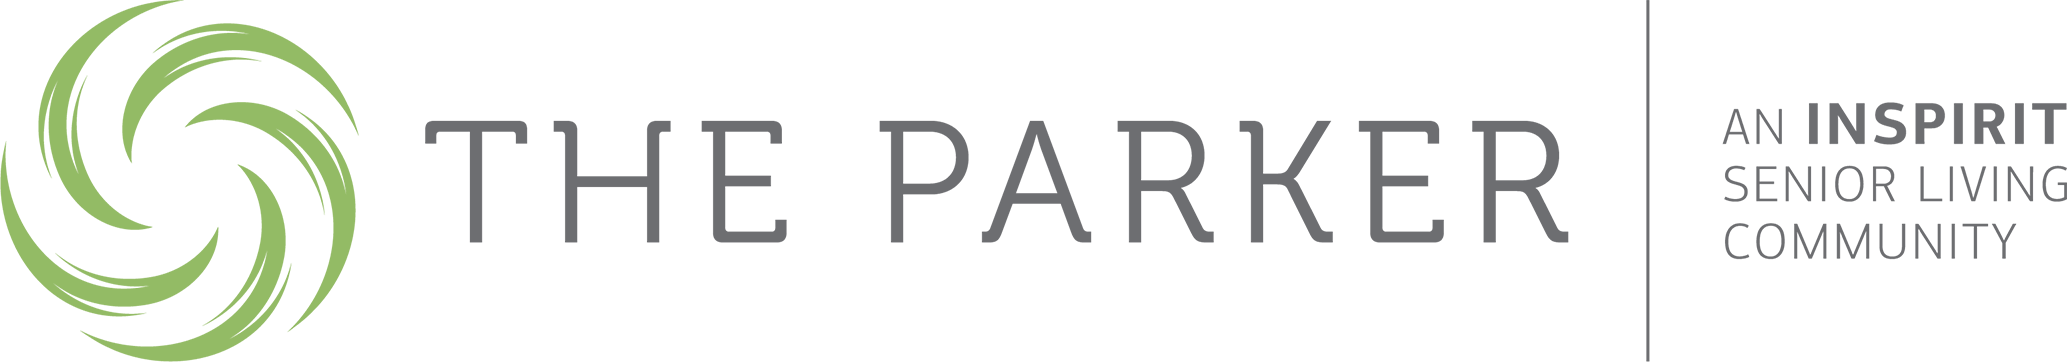 The Parker logo